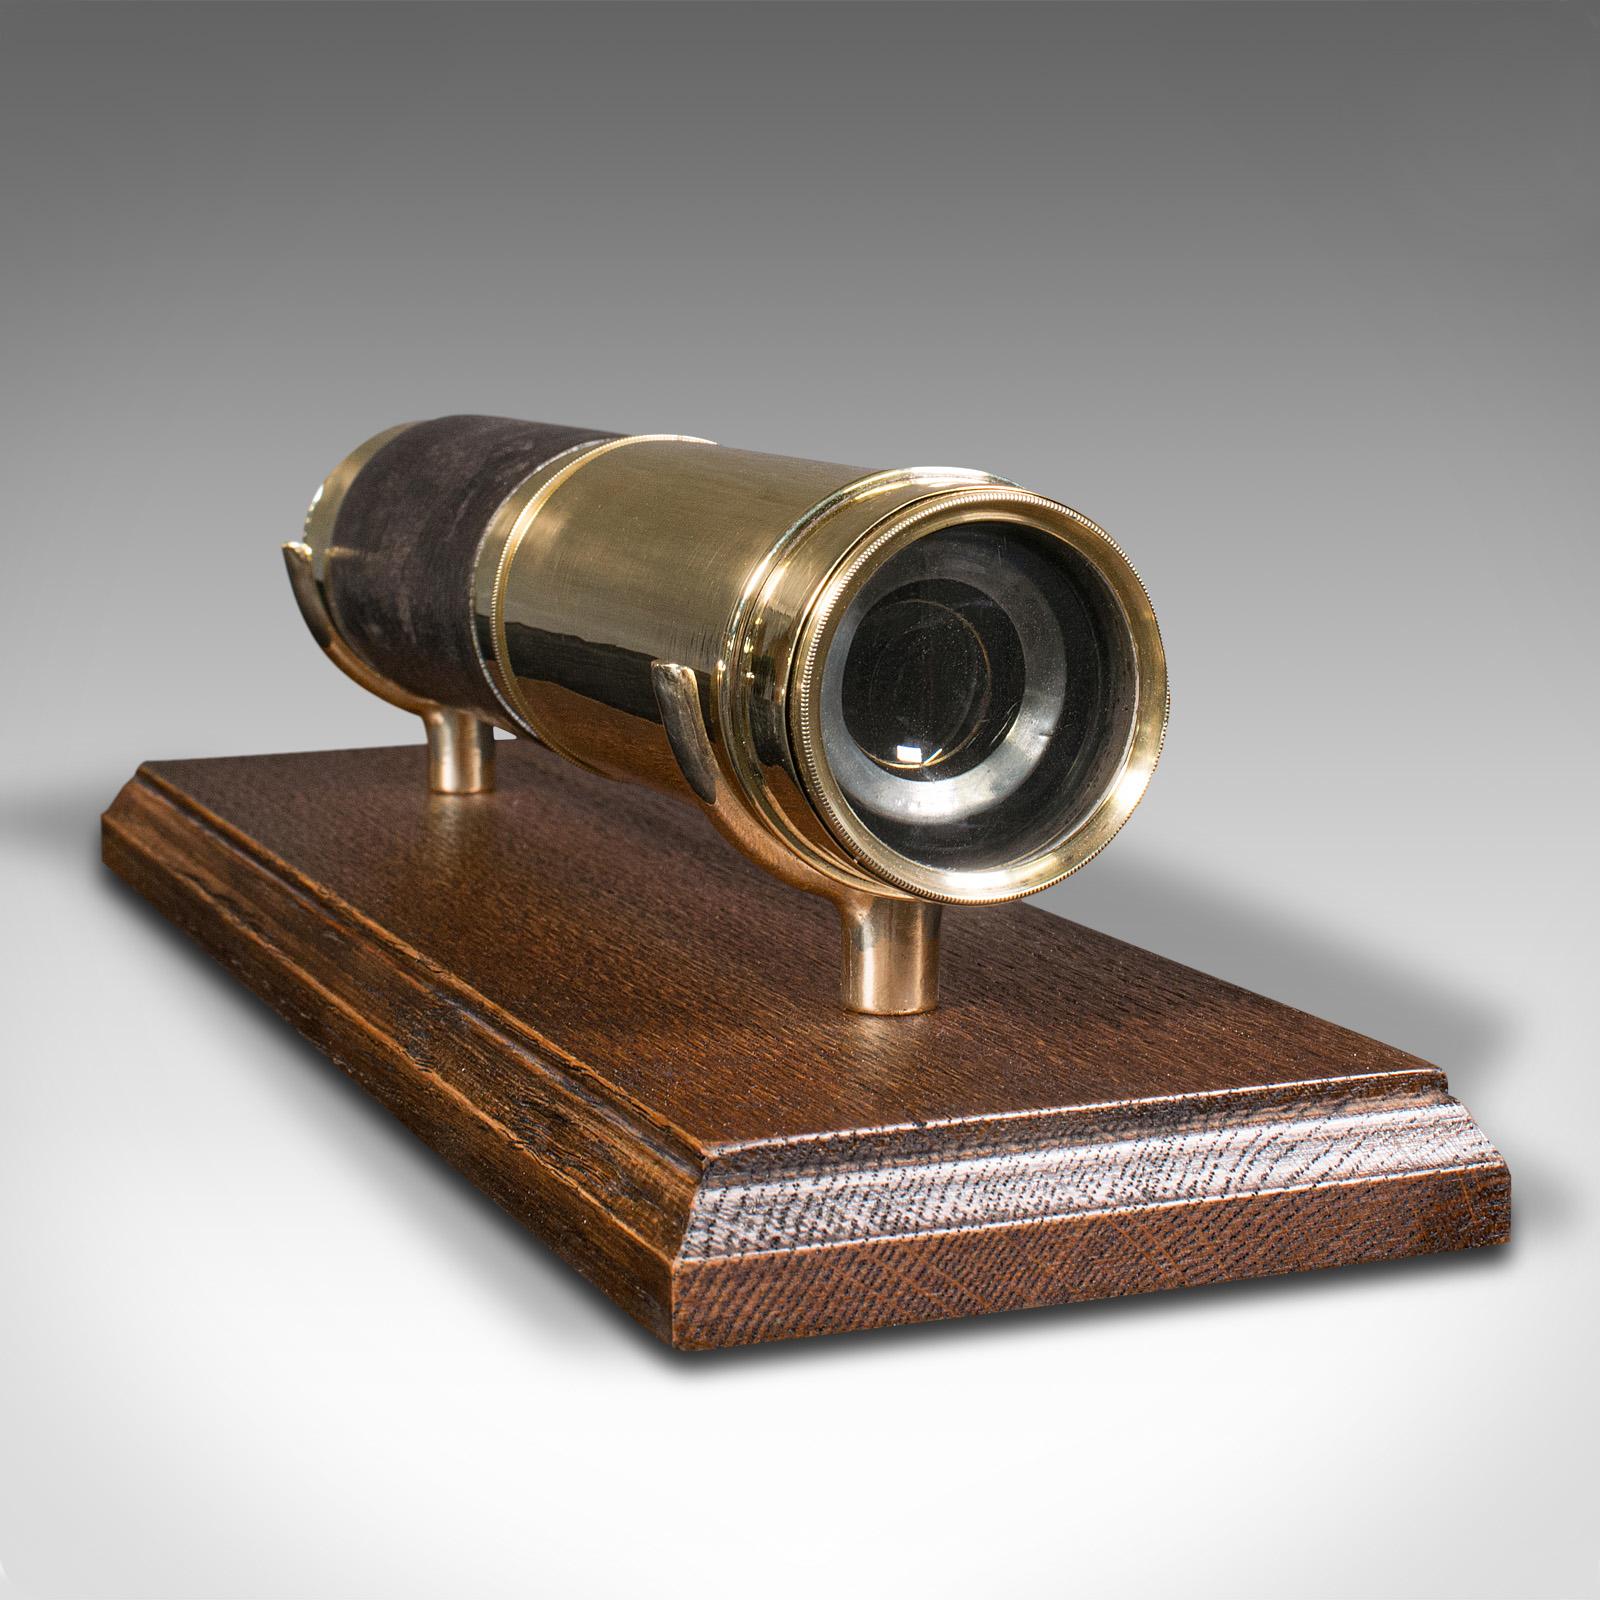 British Antique 3 Draw Telescope, English, Brass, Terrestrial Refractor, Victorian, 1900 For Sale